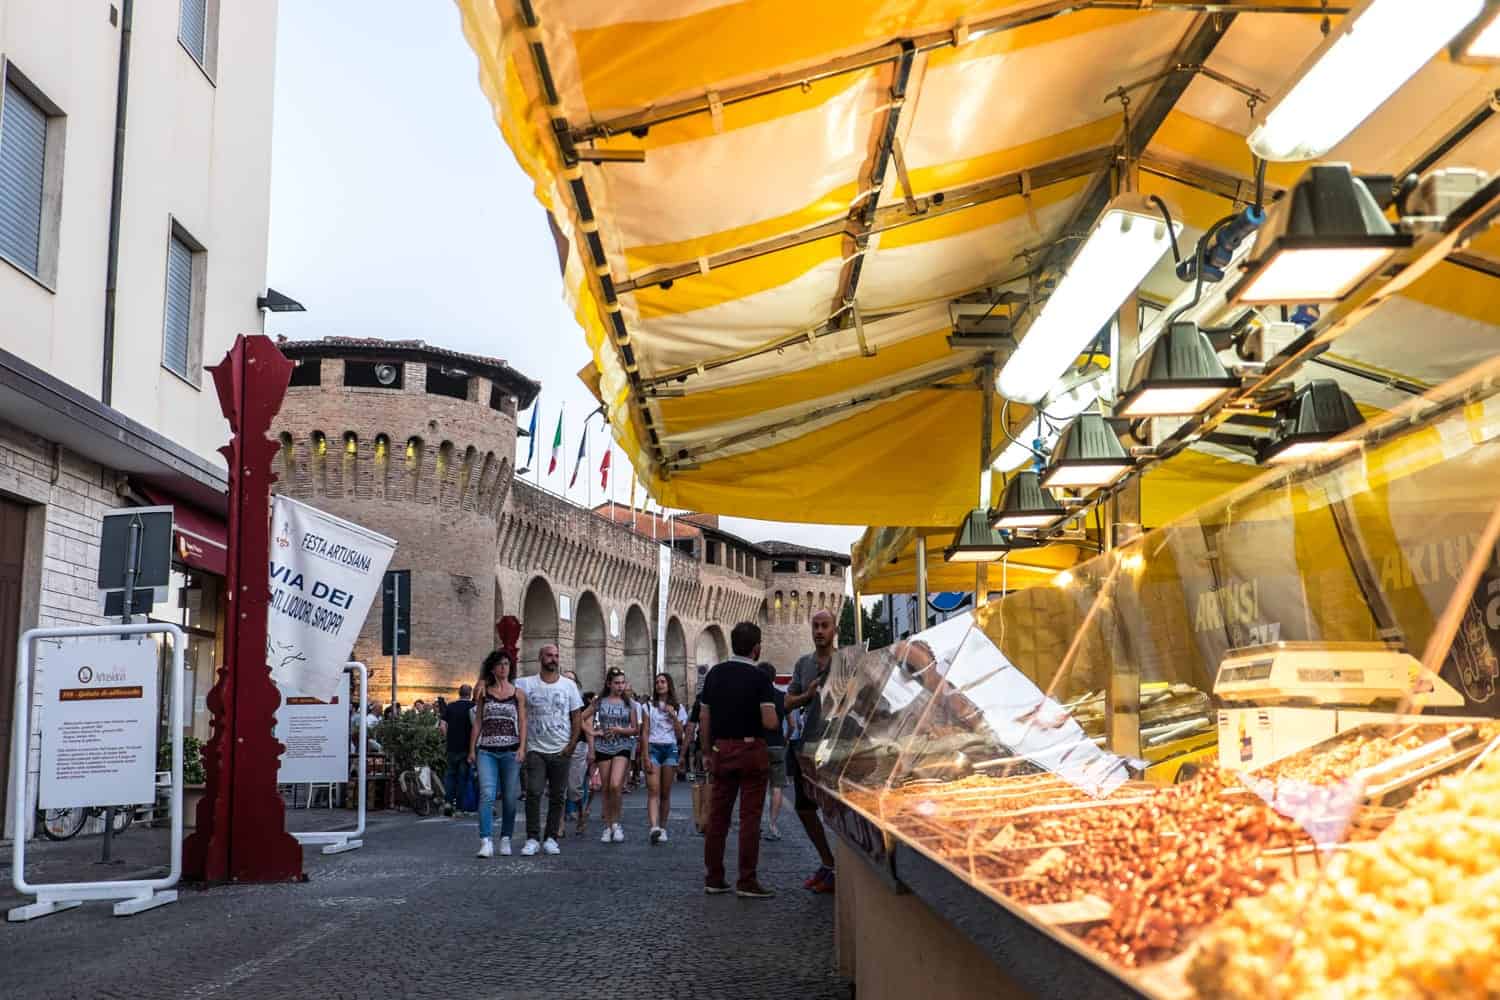 Food on every street corner during Al fresco food stalls during the Artusi Festival / Festa Artusiana in Forlimpopoli, Italy